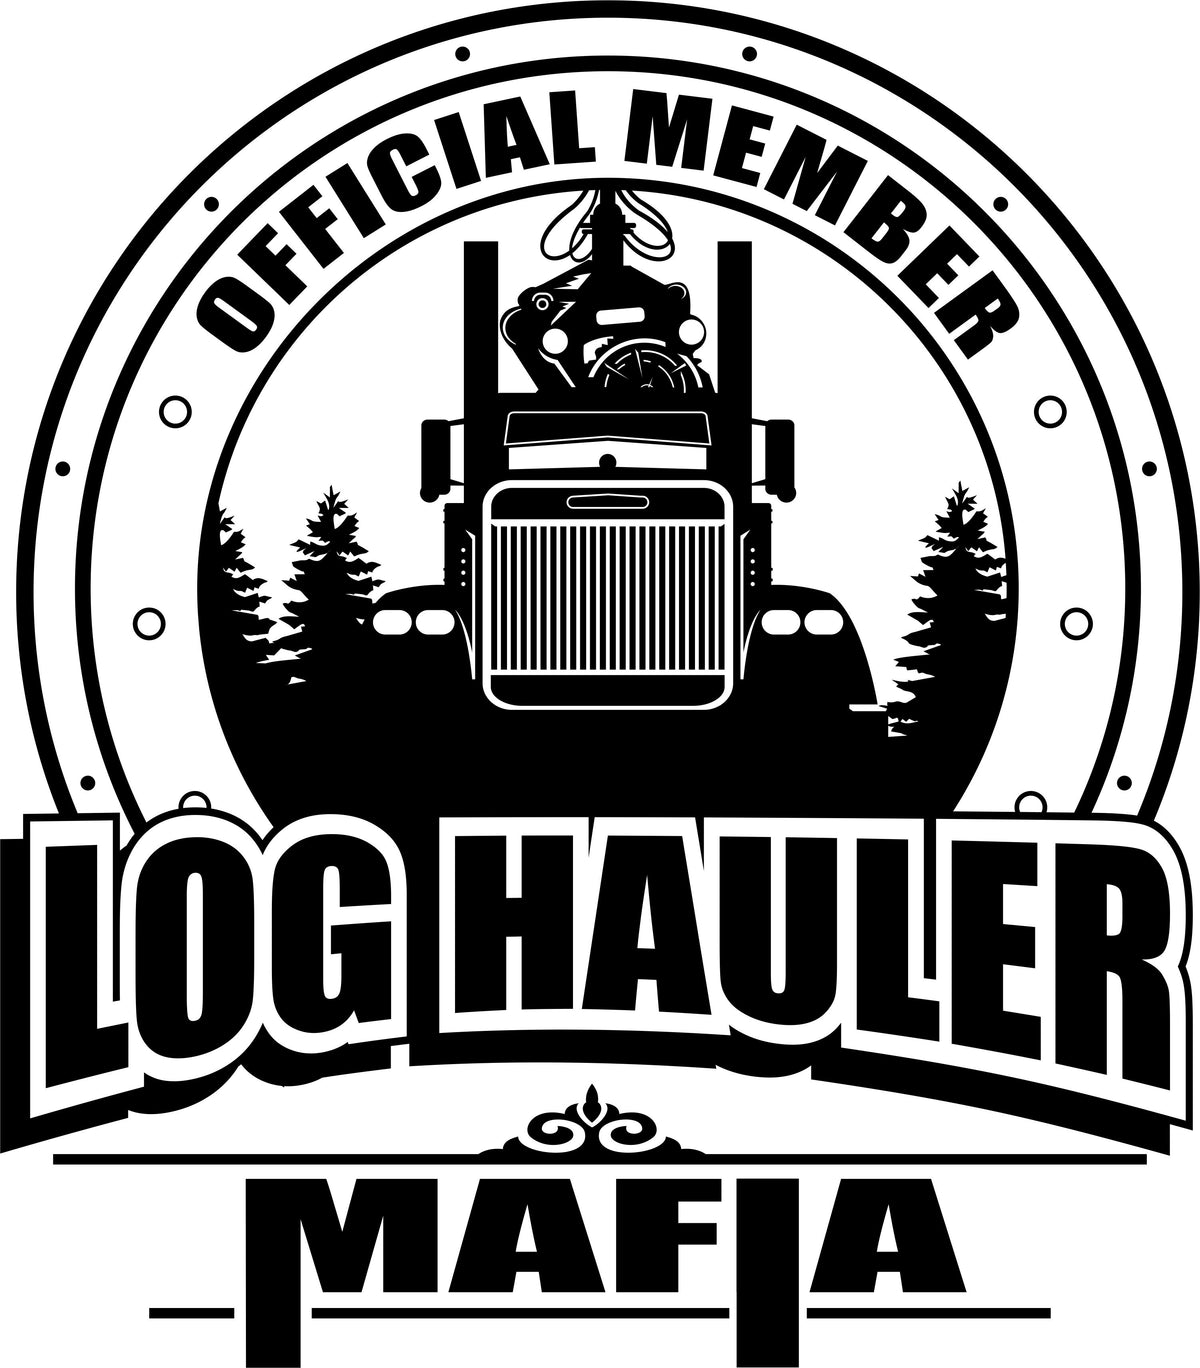 Log Hauler Mafia Freightshaker Vinyl Decal Free Shipping